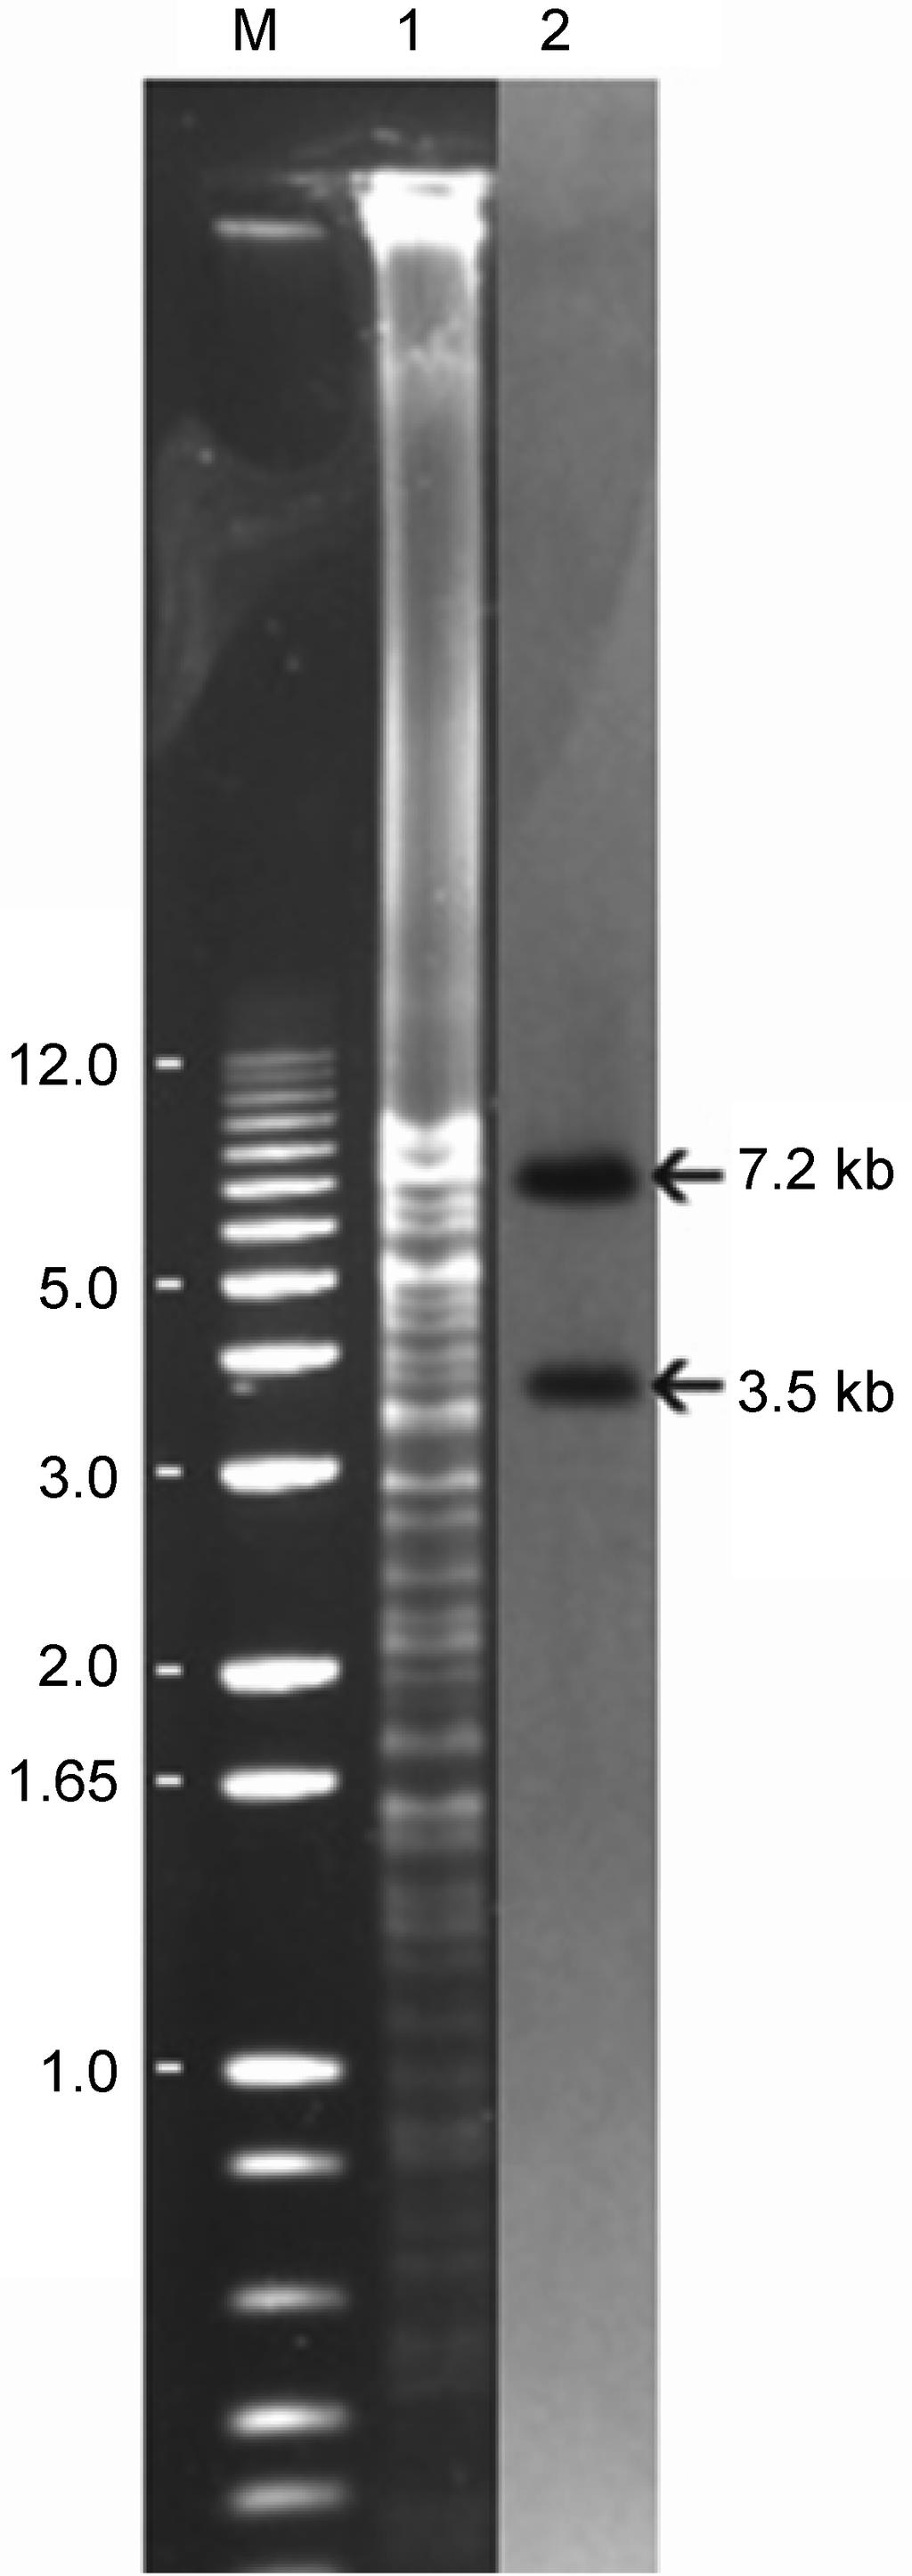 4 Lee et al. Fig. 2. Electrophoresis (lane 1) and Southern hybridization (lane 2) of BamHI digests of plasmid DNA from E. coli transconjugant 06K-006 with a general SHV probe.